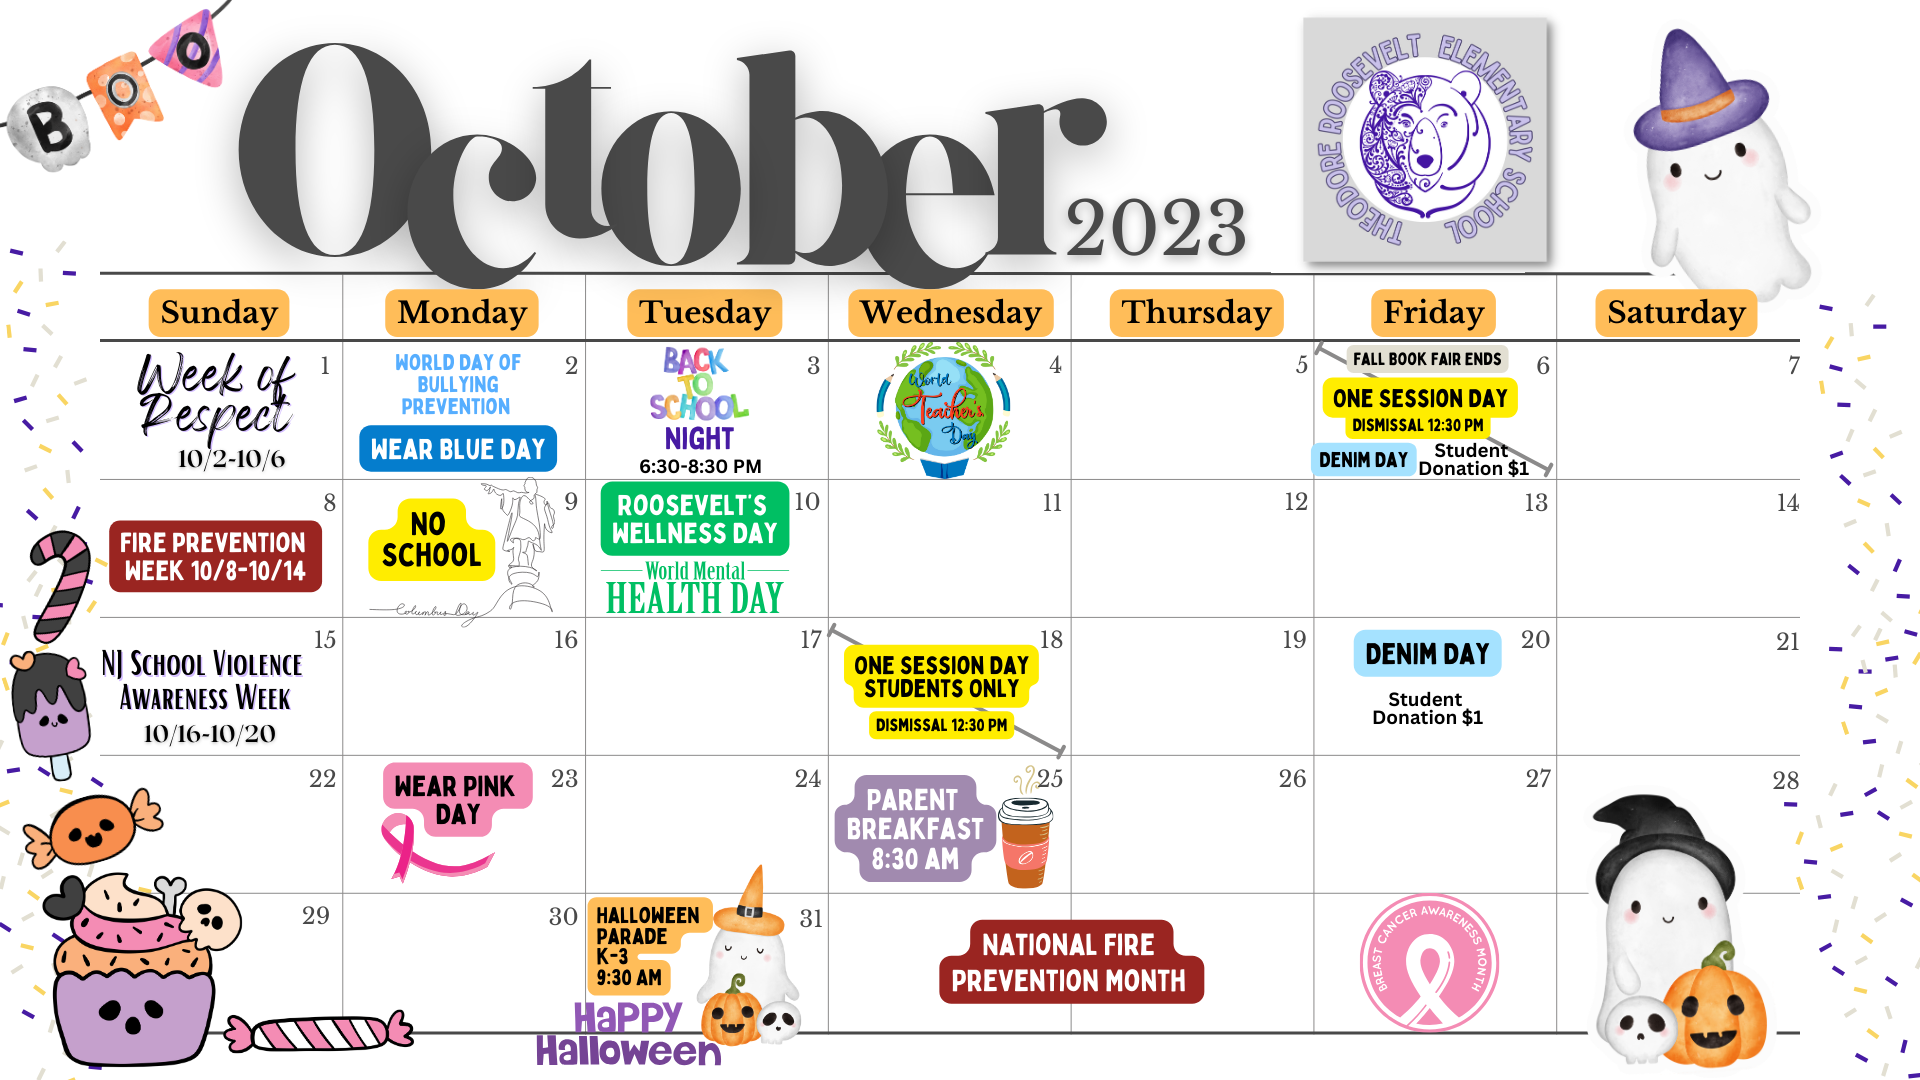 Roosevelt School-October 2023 Calendar